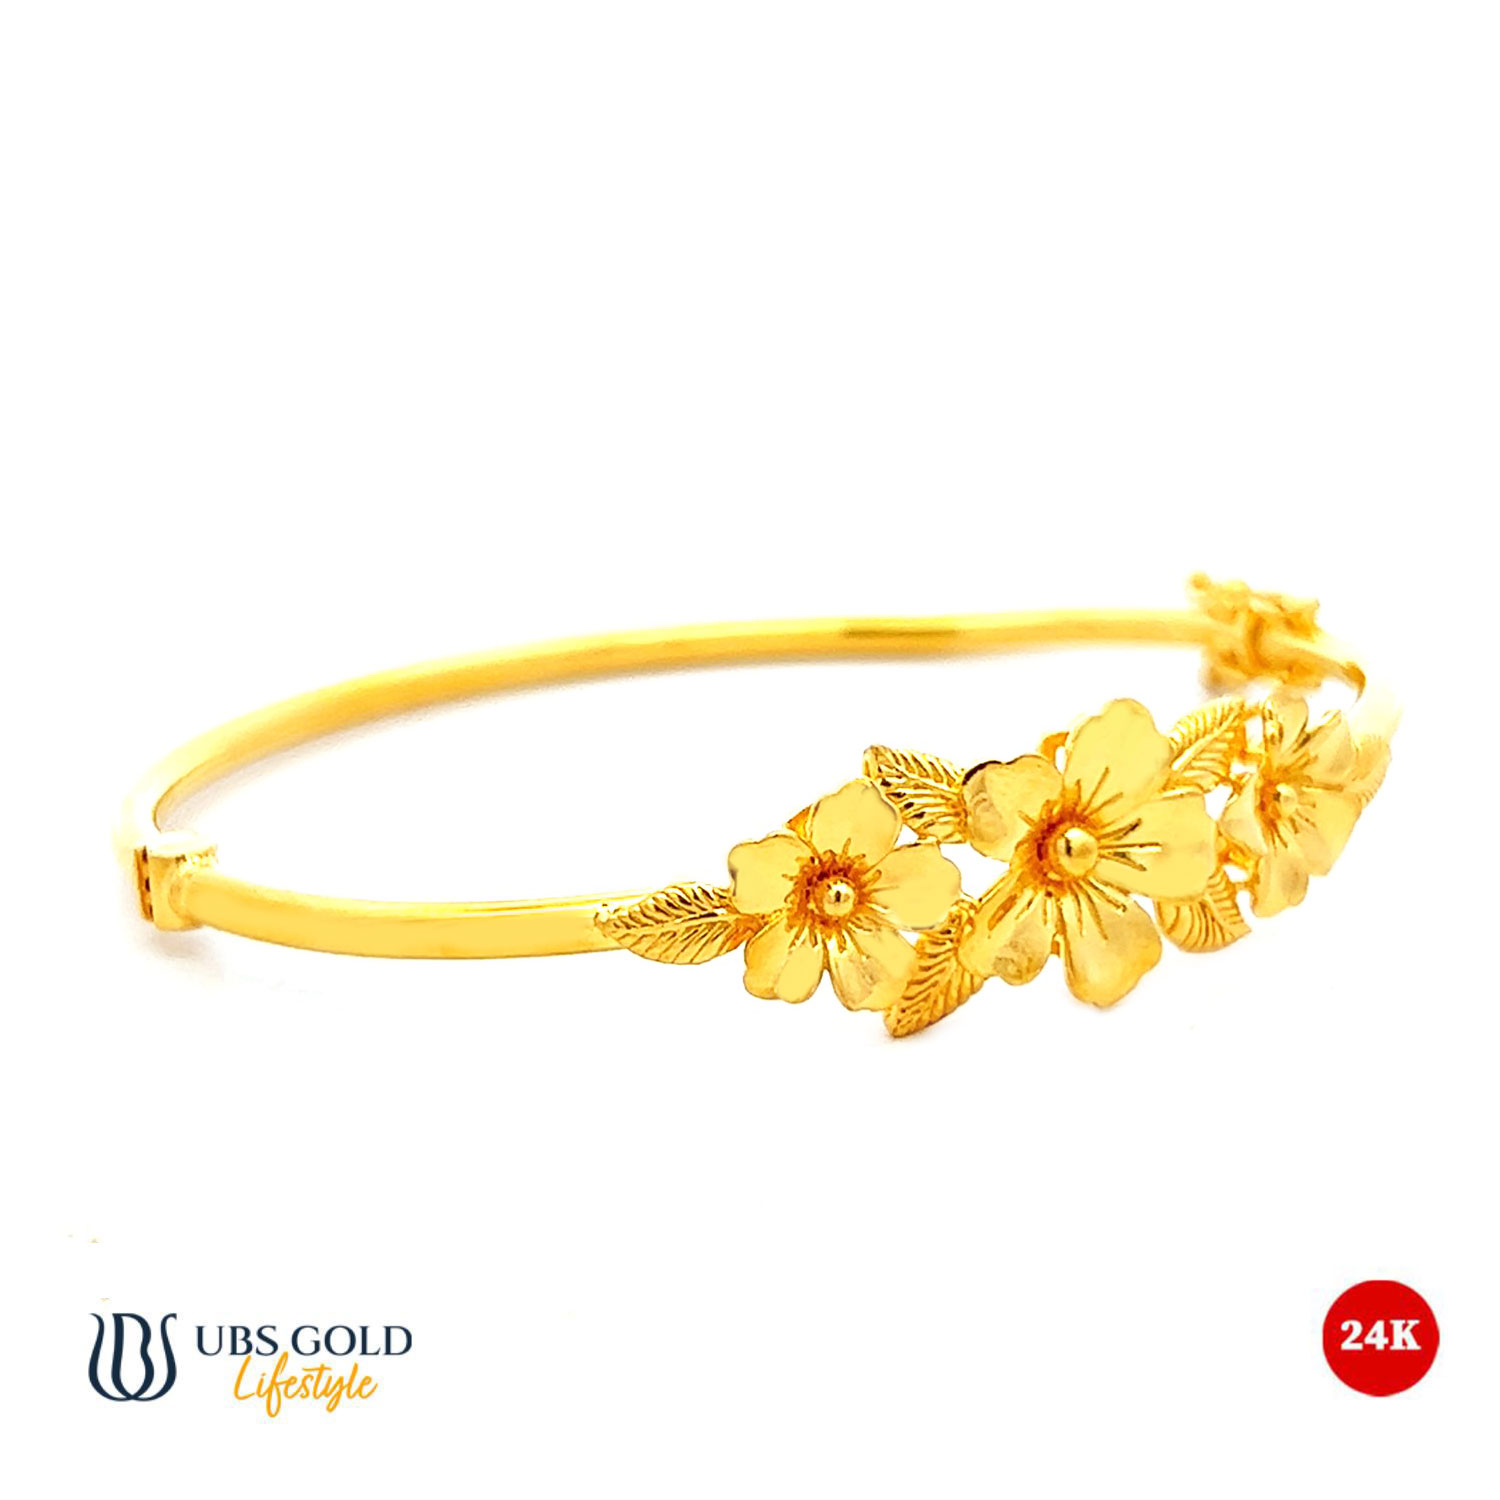 UBS Gold Gelang Emas - Vge7006 - 24K